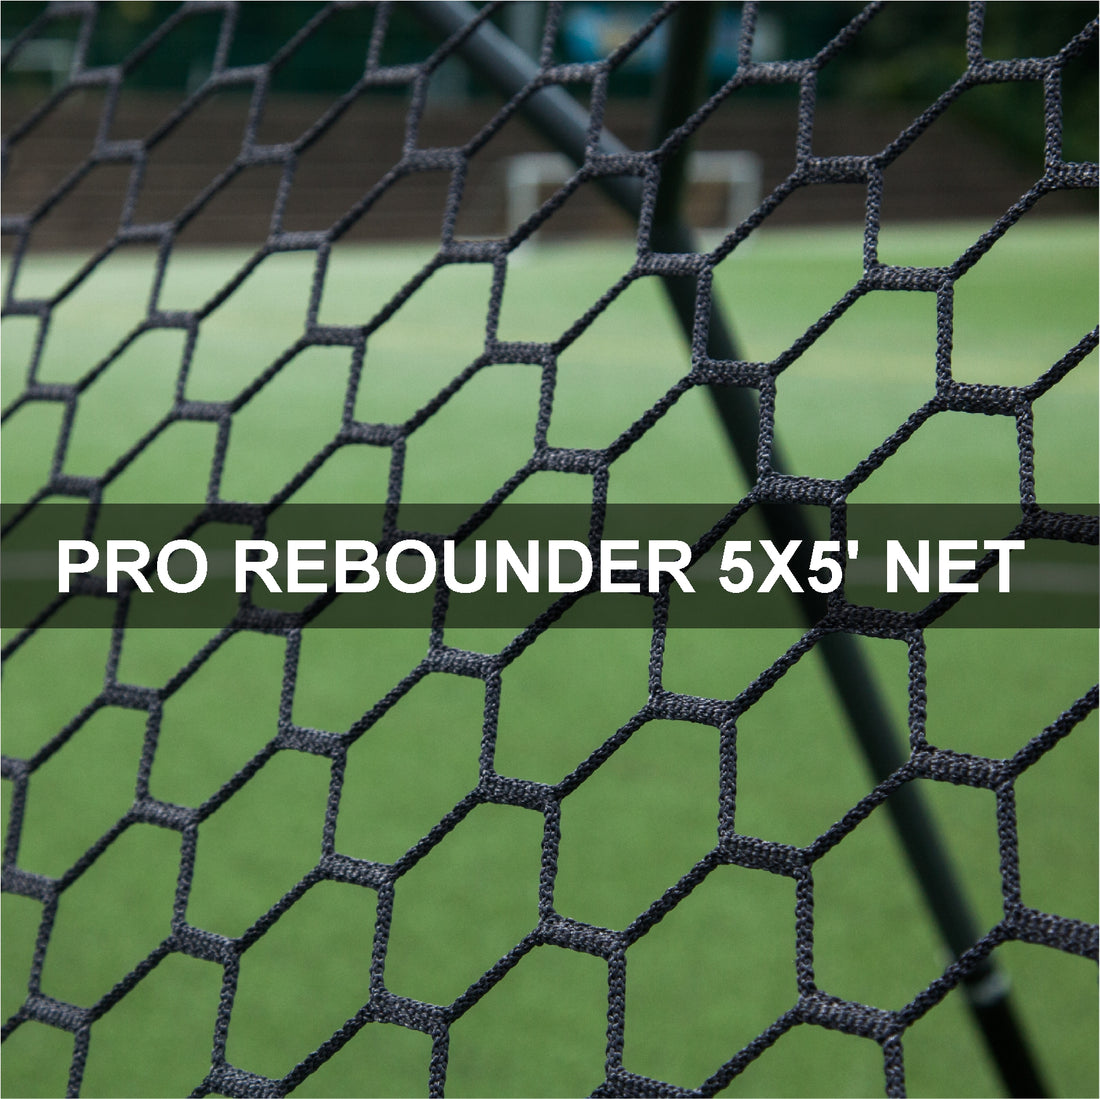 SPARE PART - NET - Pro Rebounder 5x5' Net